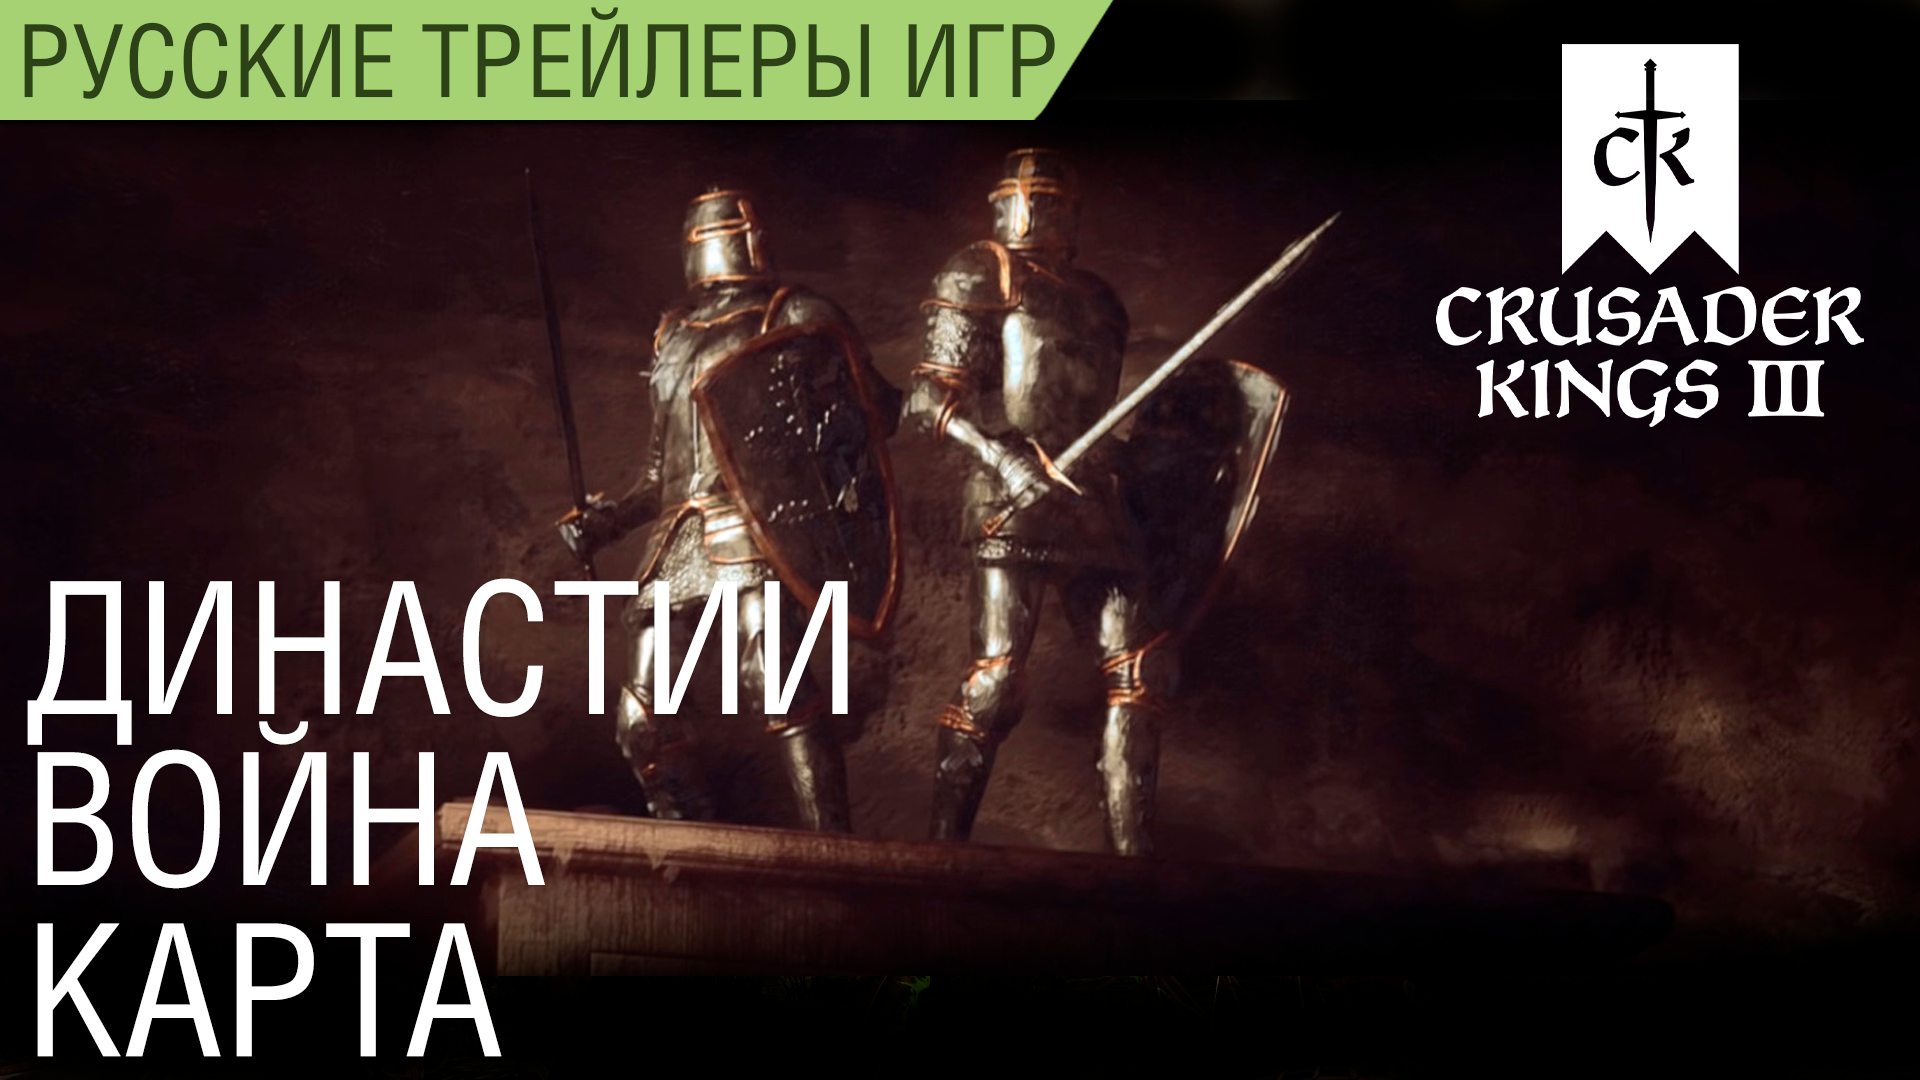 Crusader Kings III - Династии, карта, война - Русский трейлер